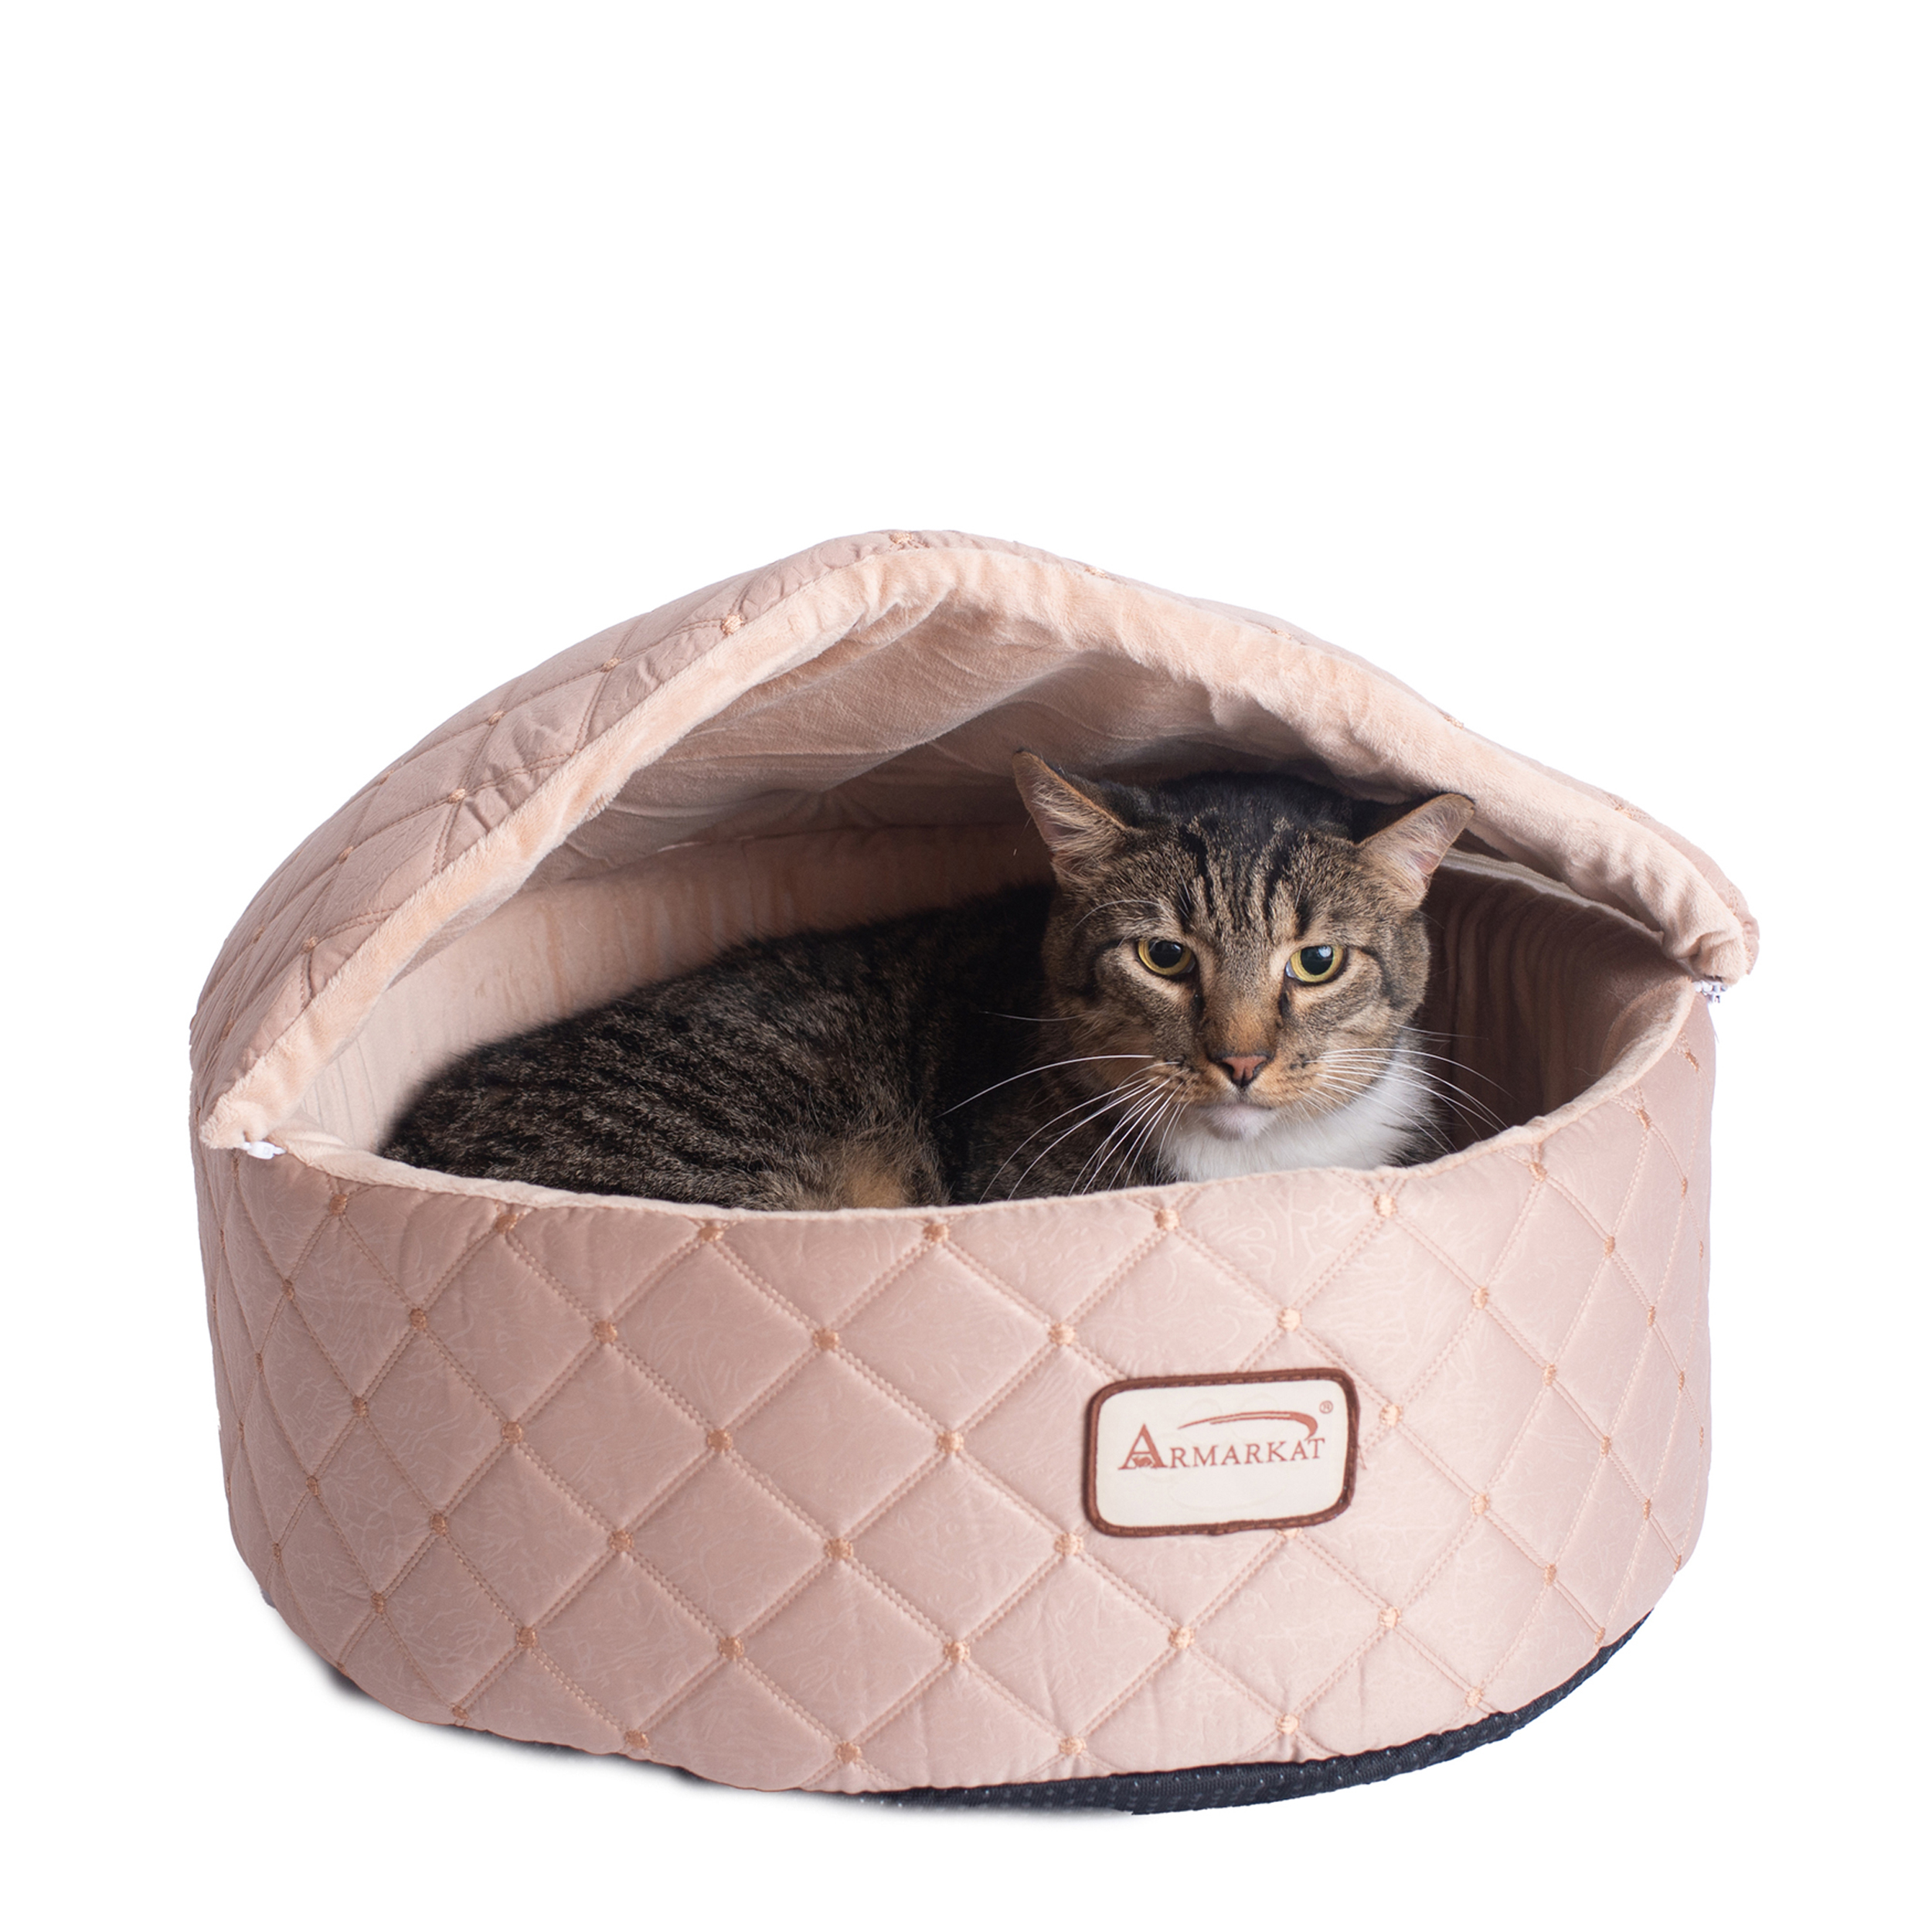 Armarkat Cat Bed, Medium, Light Apricot, C33HFS/FS-M - image 2 of 6